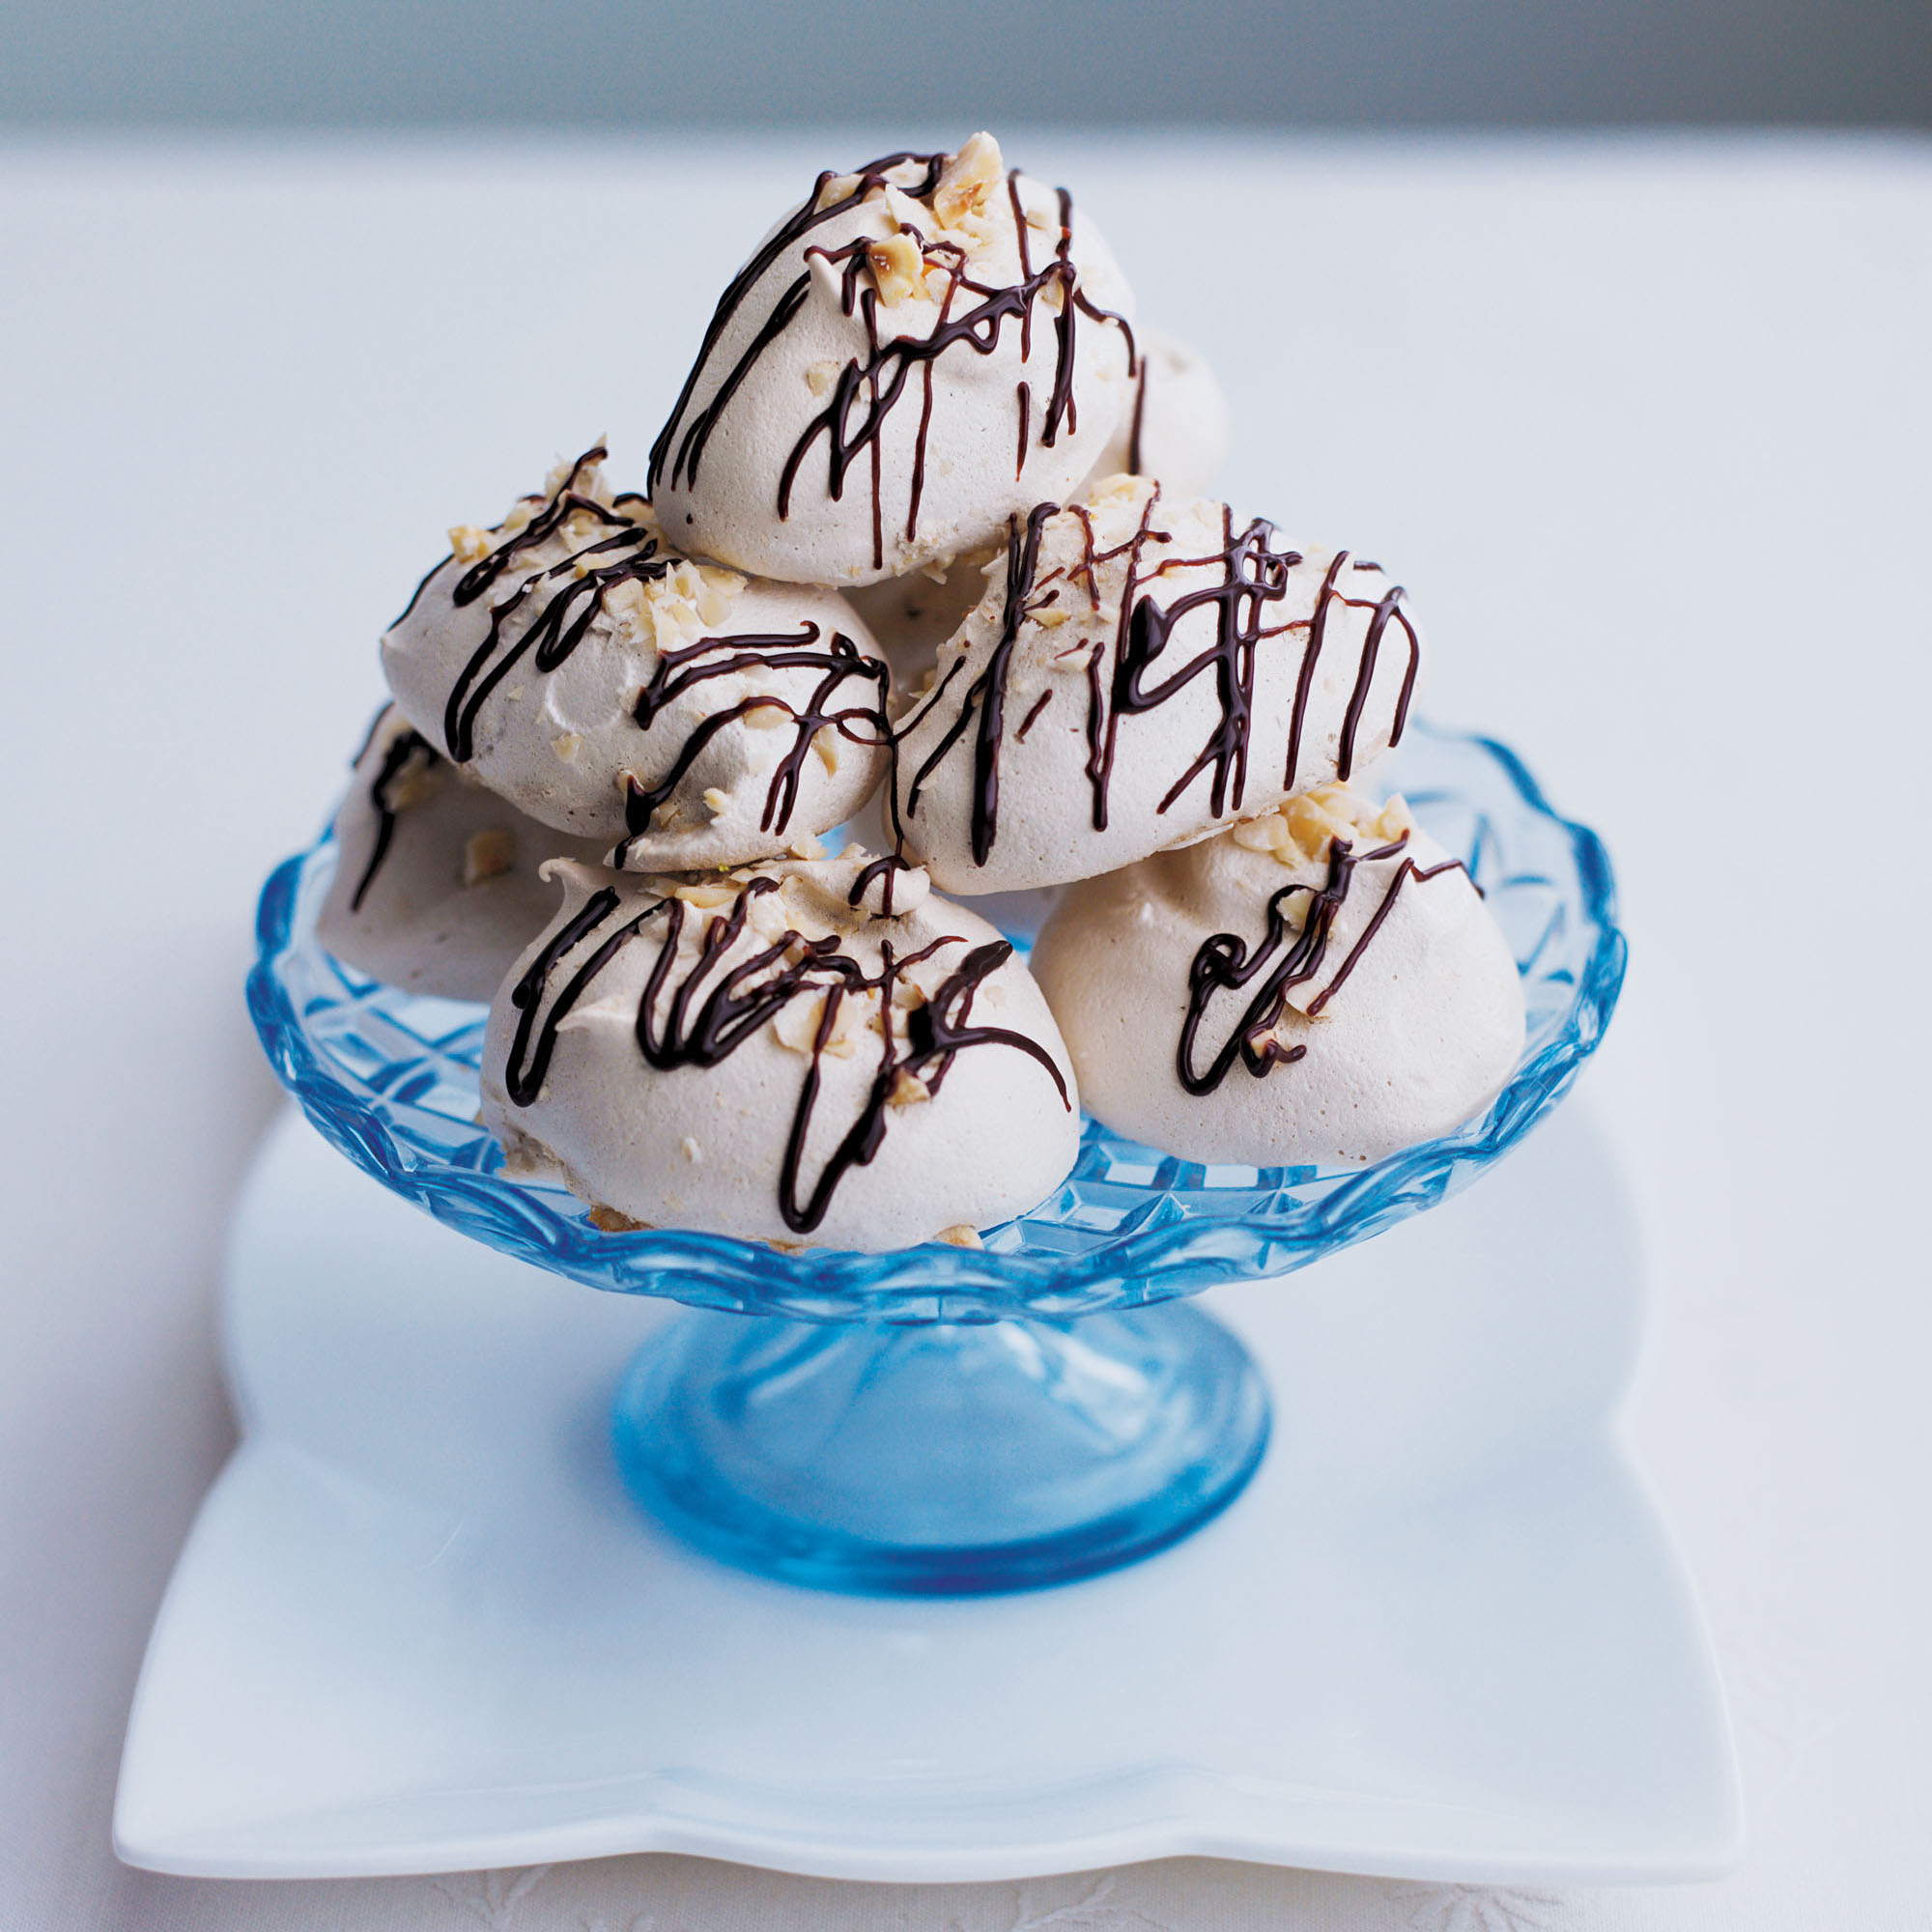 Mini brown sugar and hazelnut meringue recipe